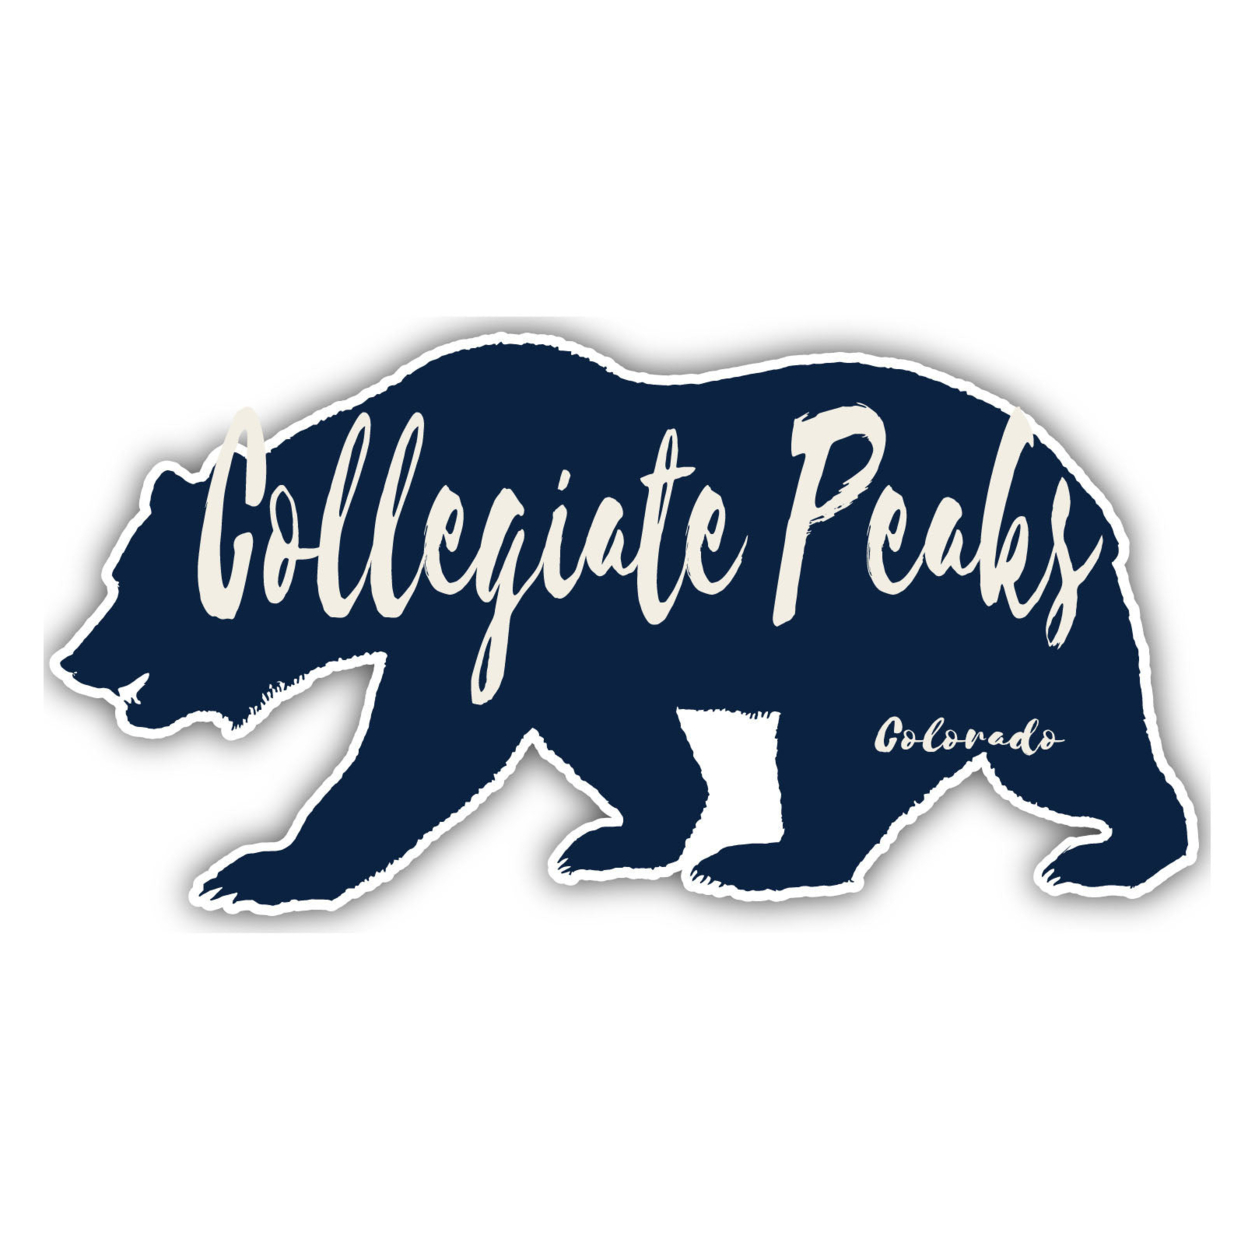 Collegiate Peaks Colorado Souvenir Decorative Stickers (Choose Theme And Size) - Single Unit, 10-Inch, Tent